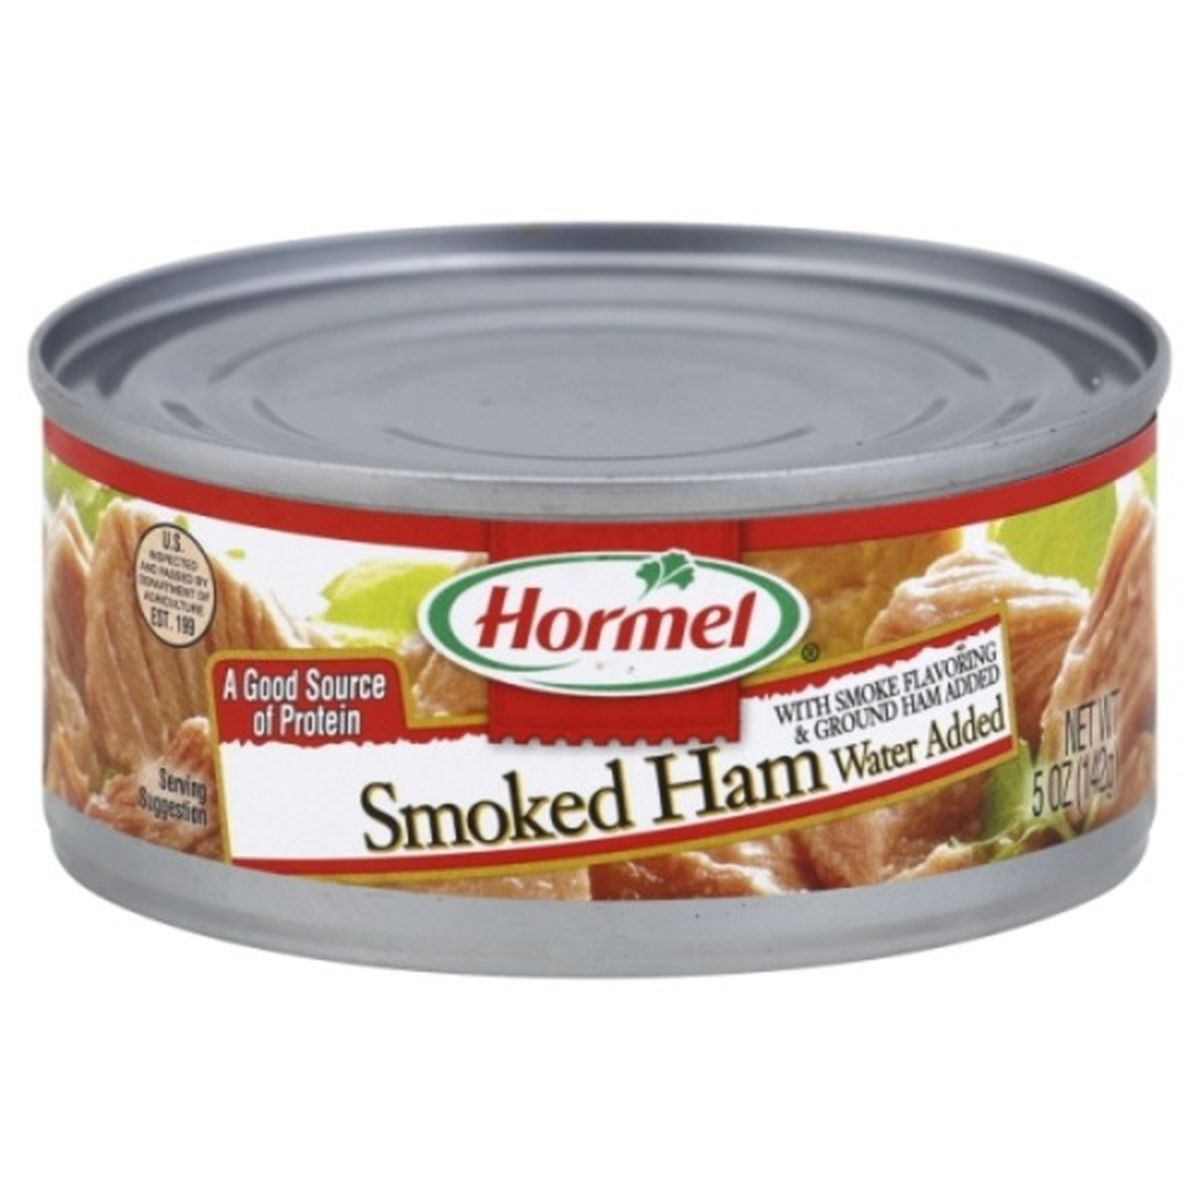 Calories in Hormel Ham, Smoked